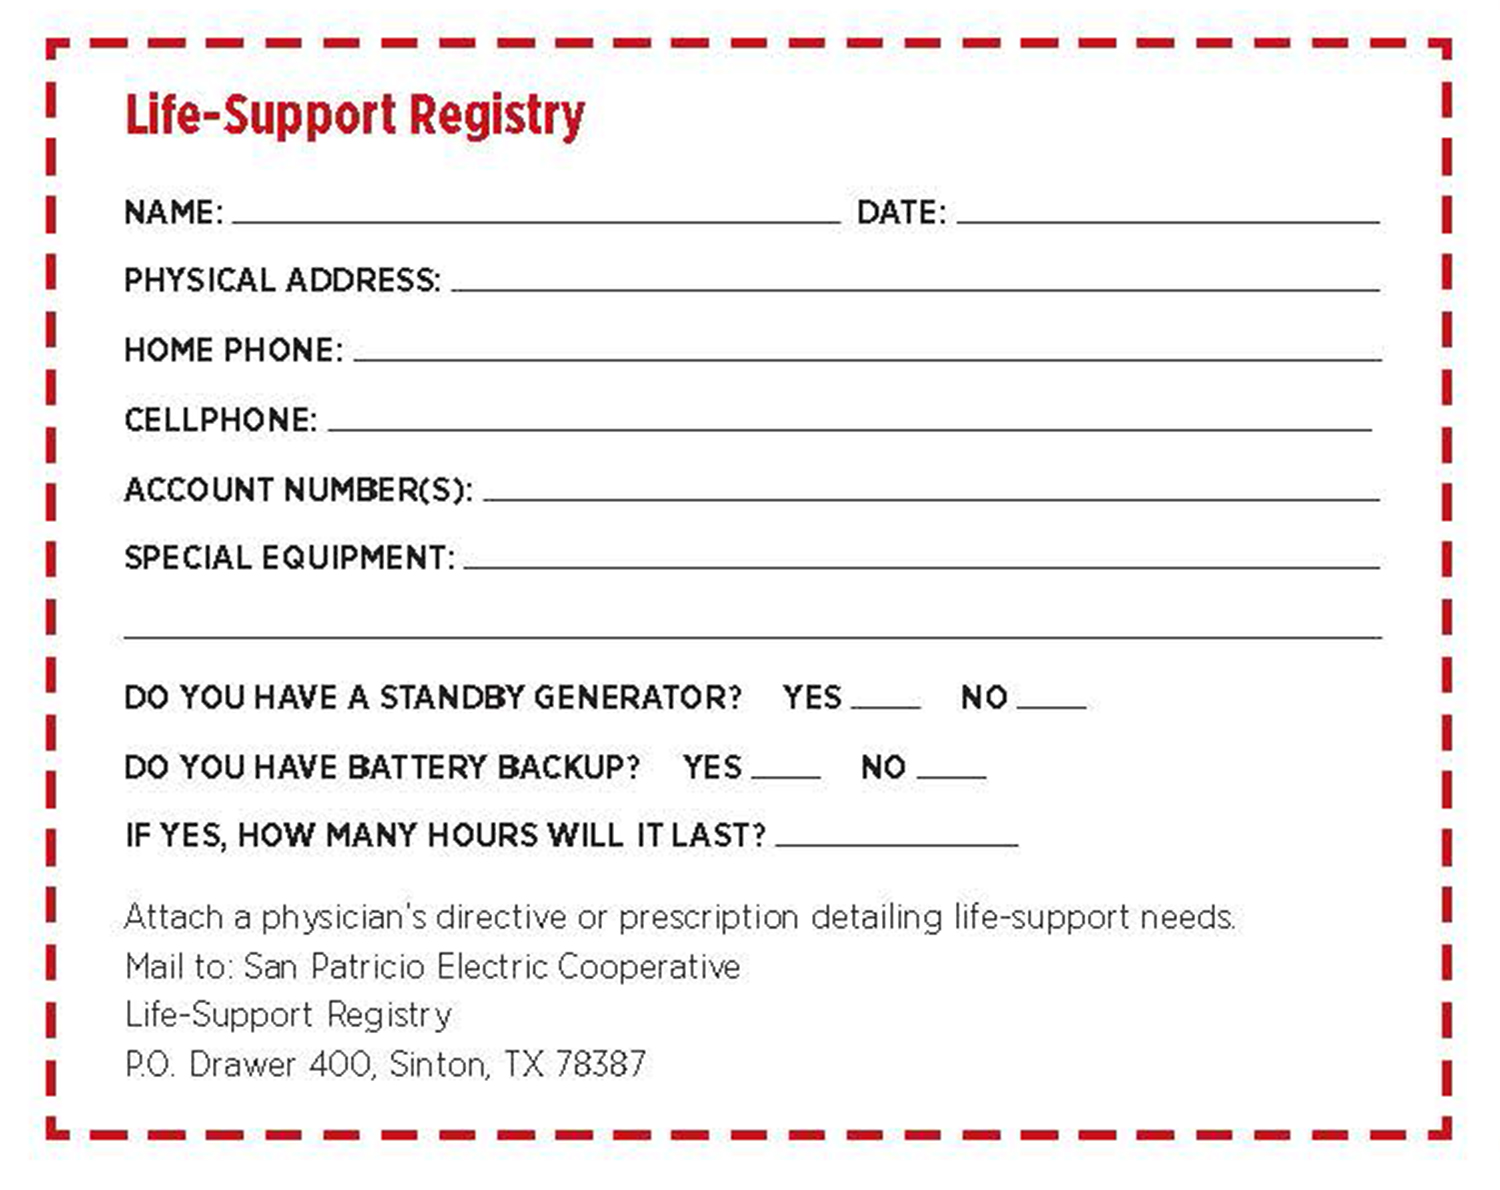 Life Support Registry Form